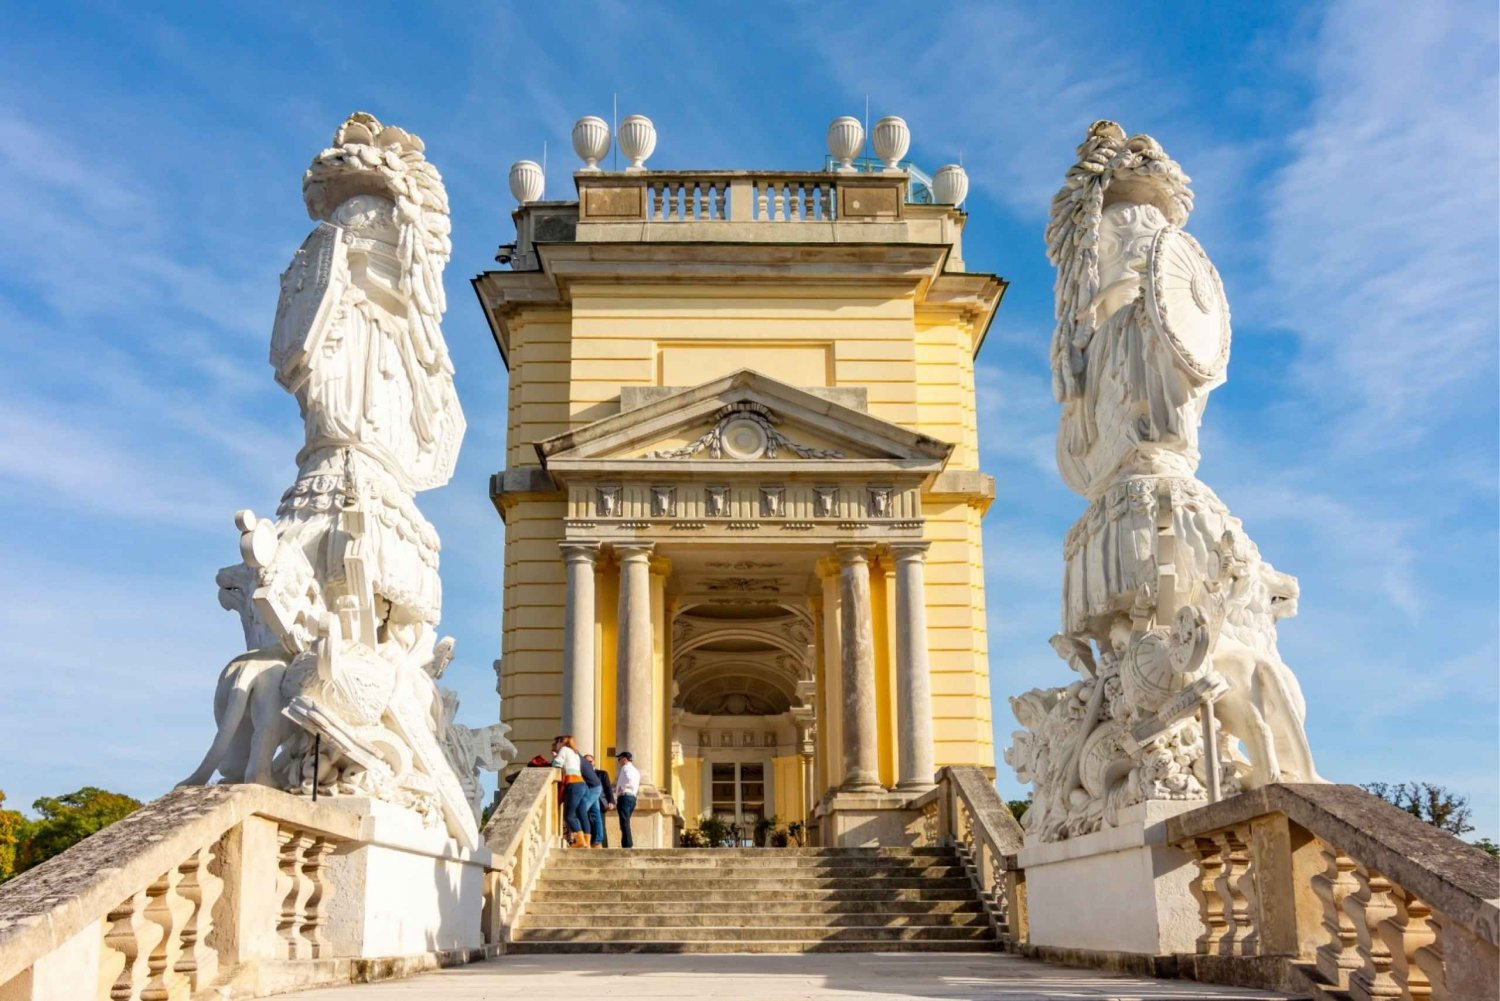 Admiring-Festive-Decorations-at-Schonbrunn-Palace